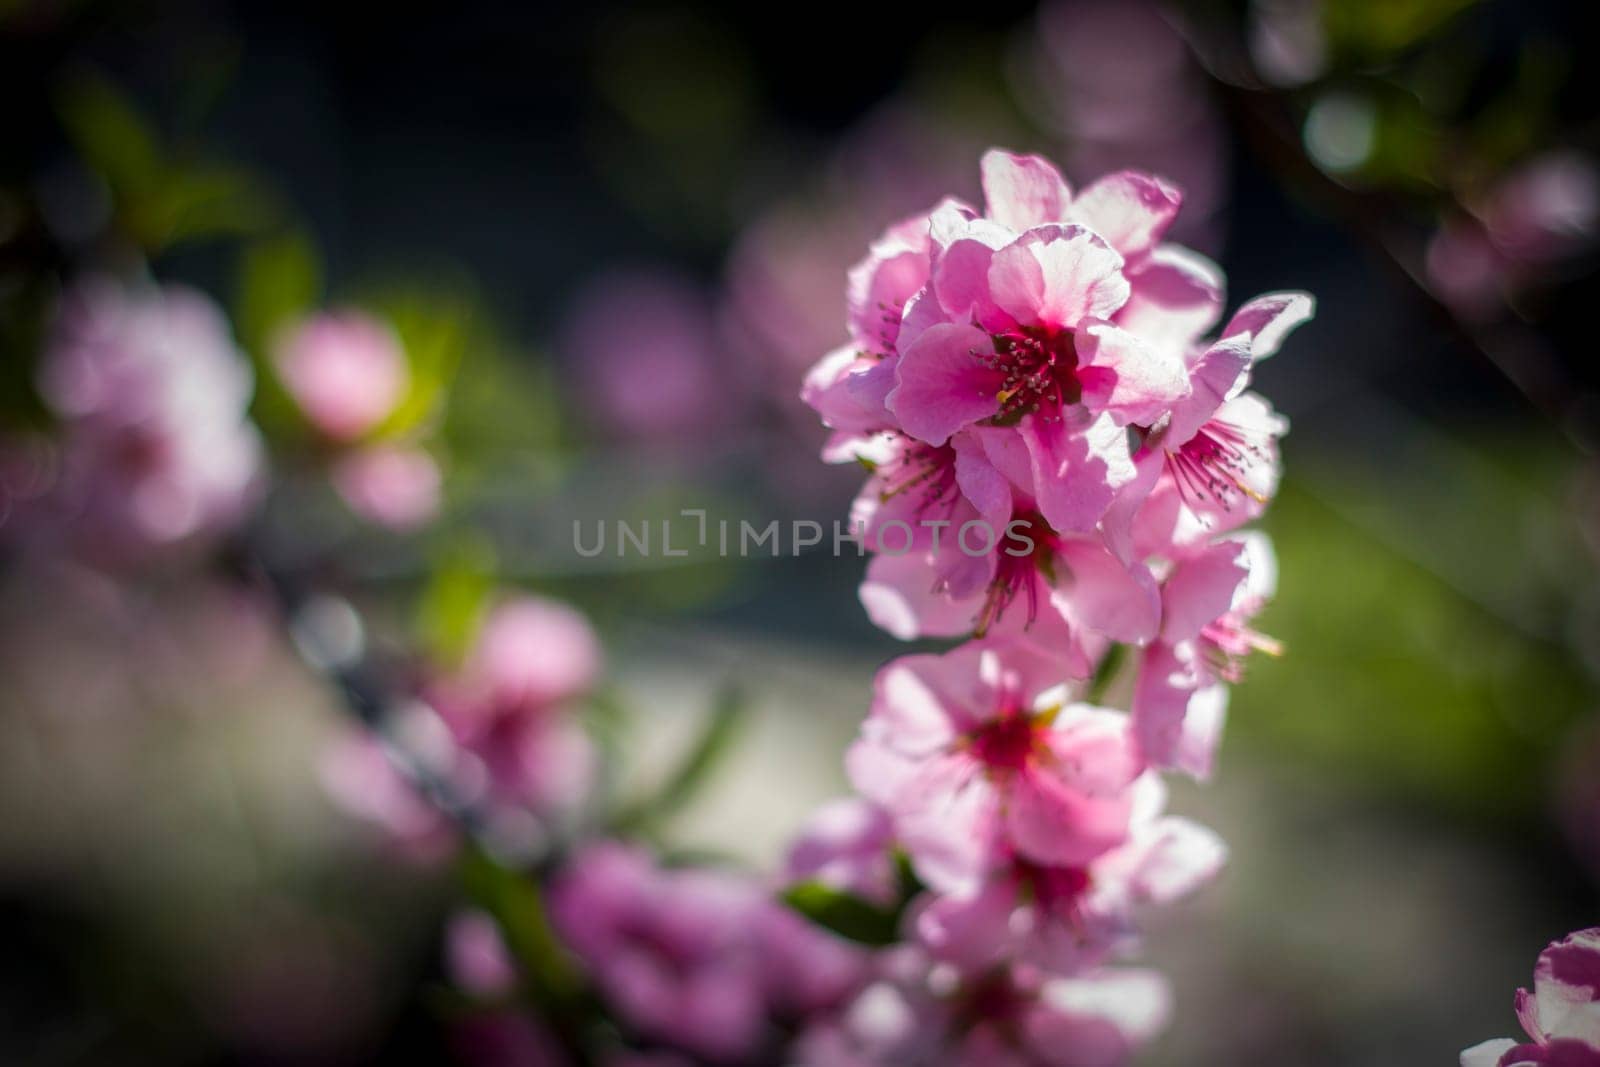 Peach nectarine spring blossom flowers on branch. Agriculture beautiful season farming springtime landscape